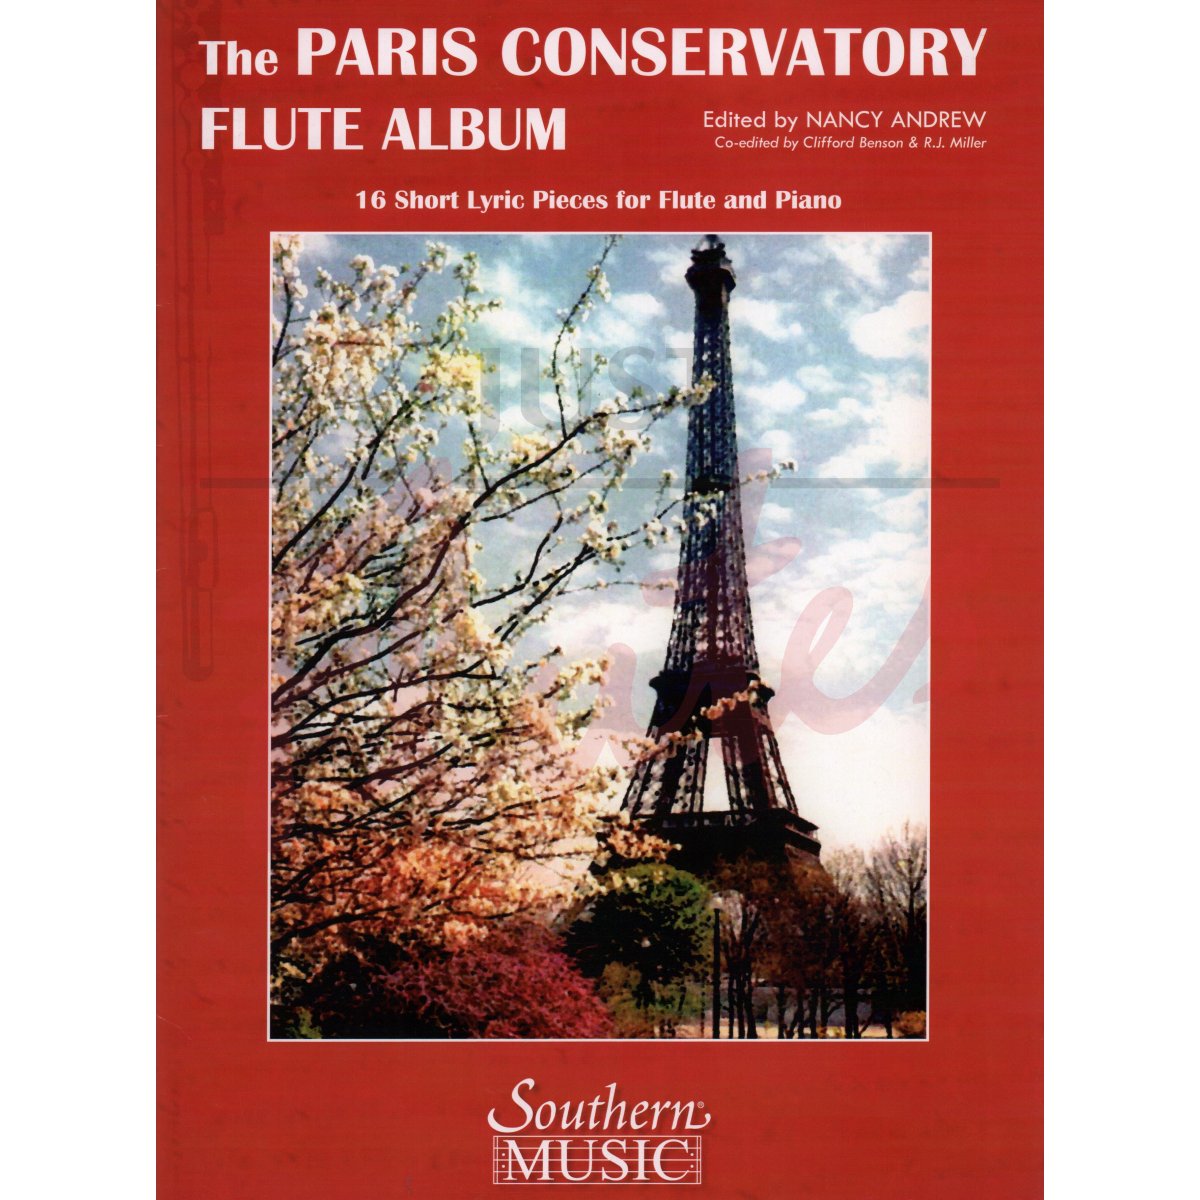 The Paris Conservatory Flute Album for Flute and Piano